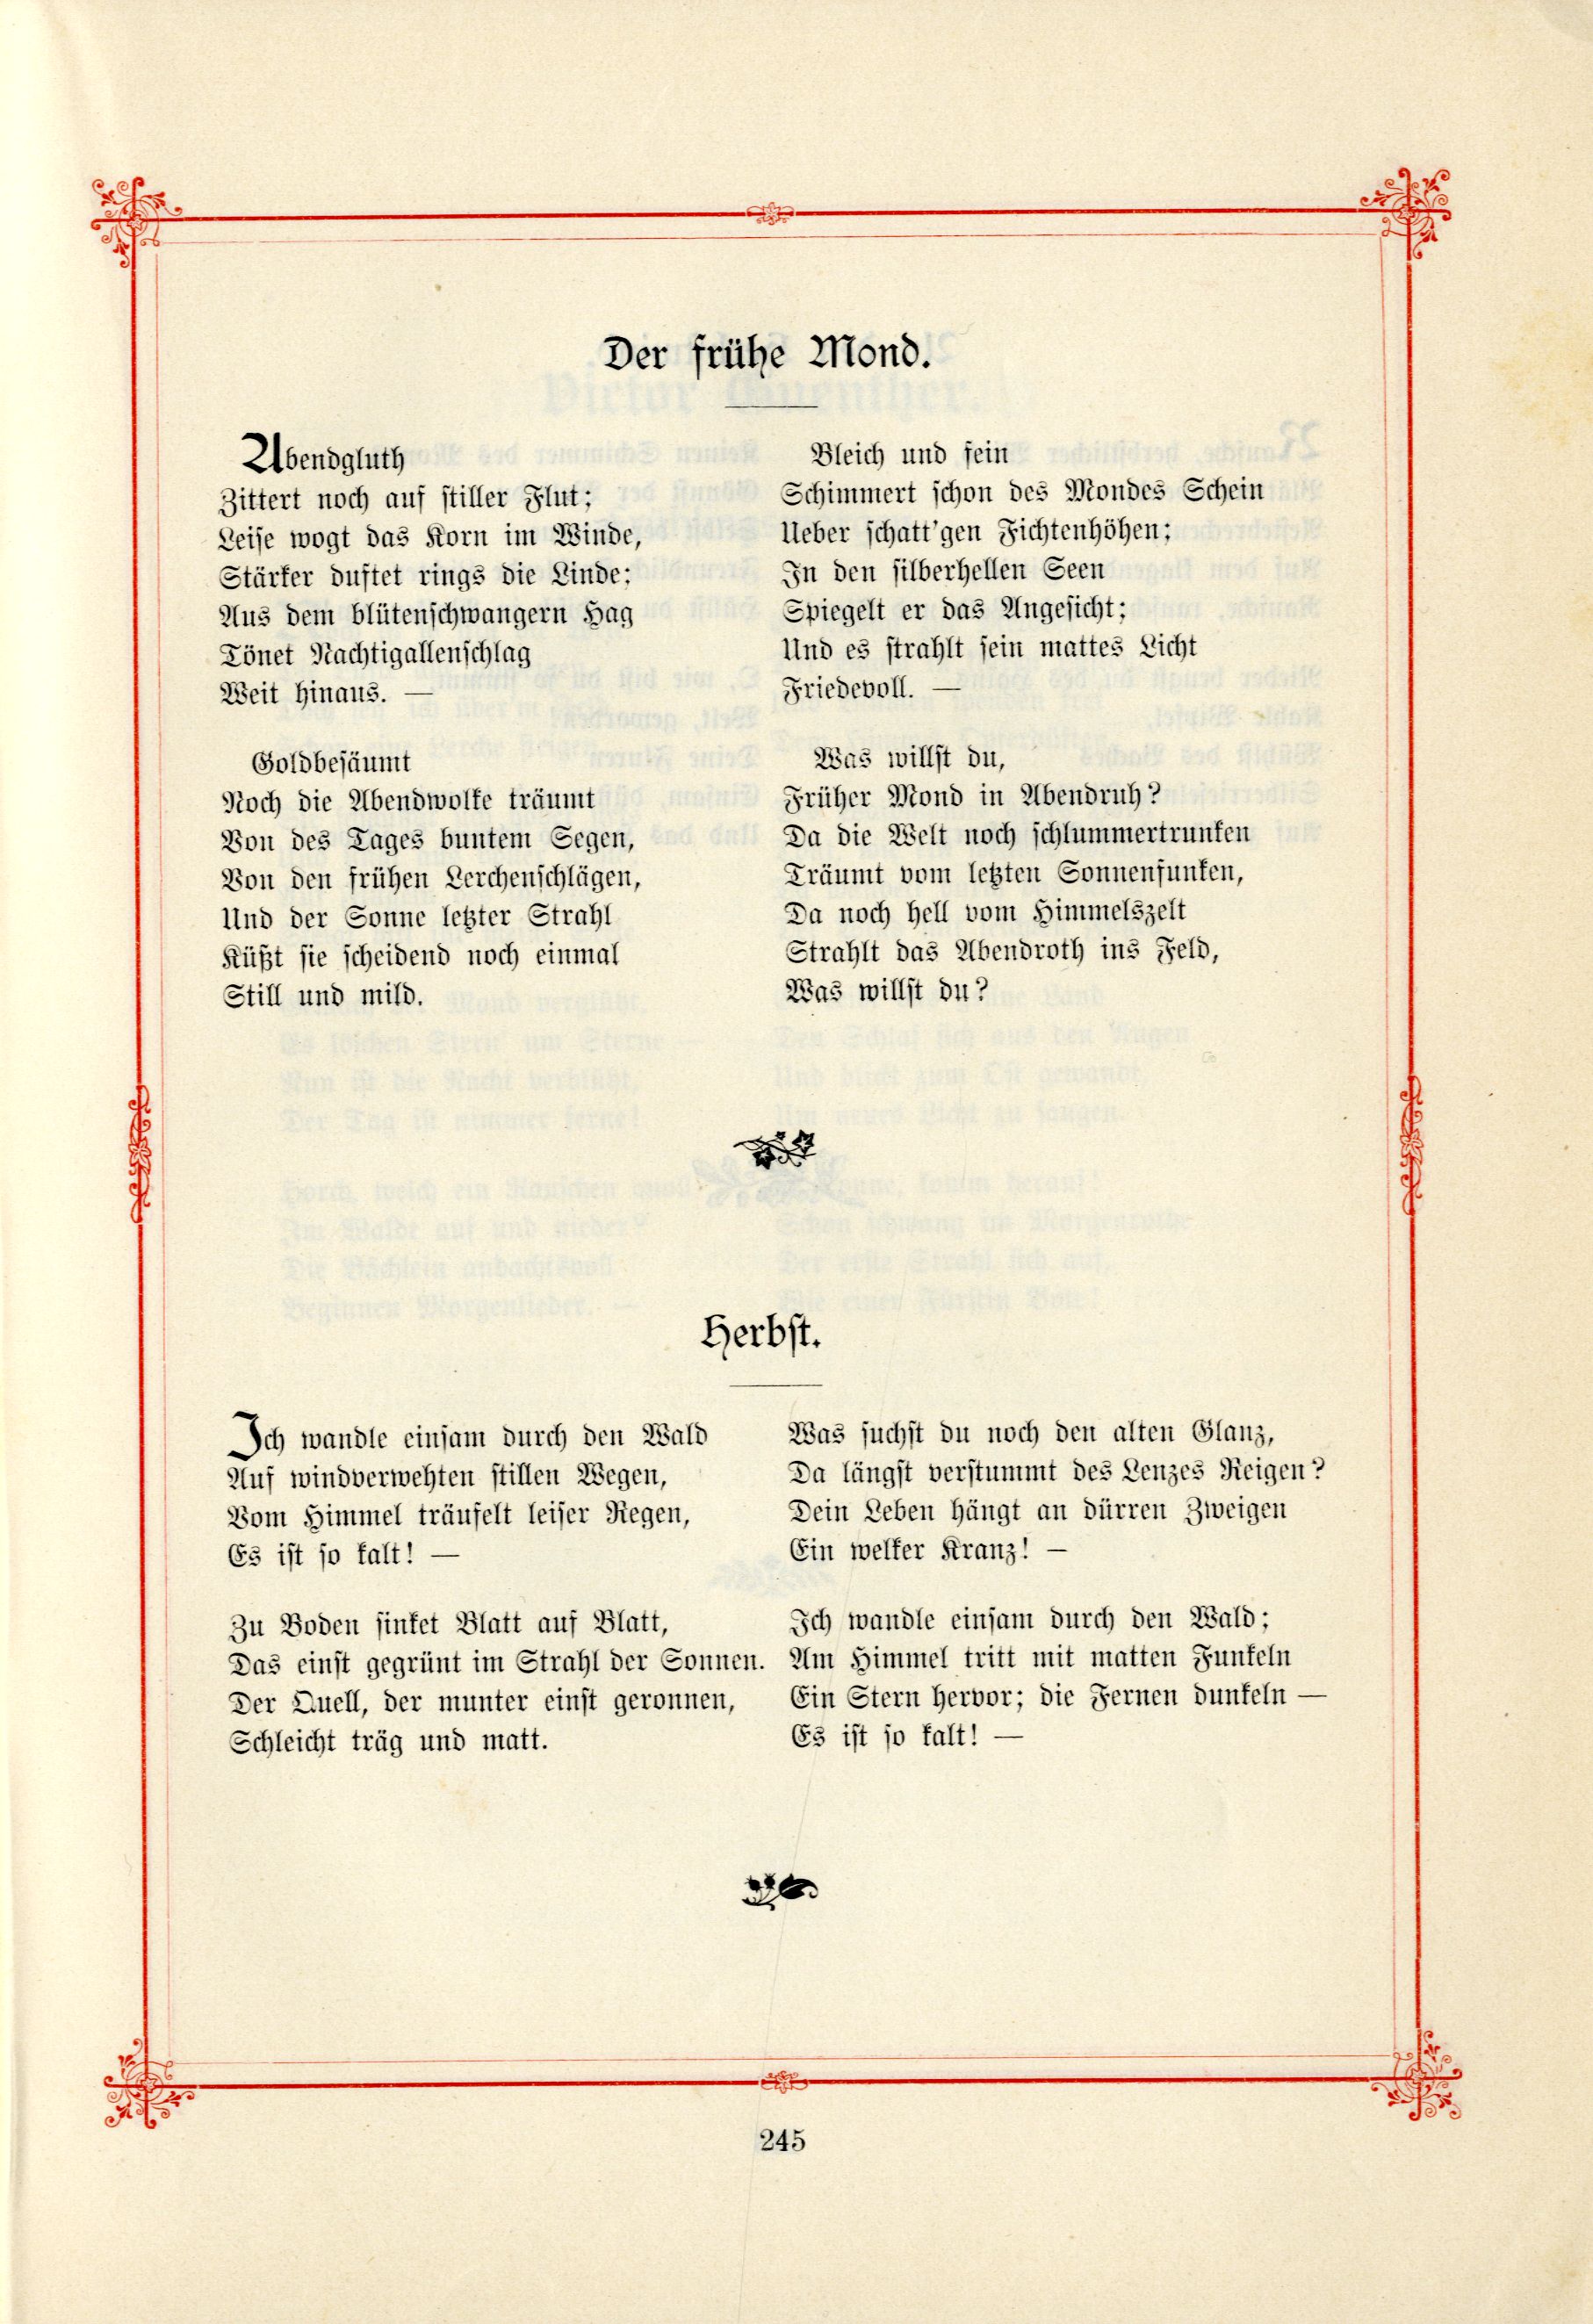 Der frühe Mond (1895) | 1. (245) Основной текст